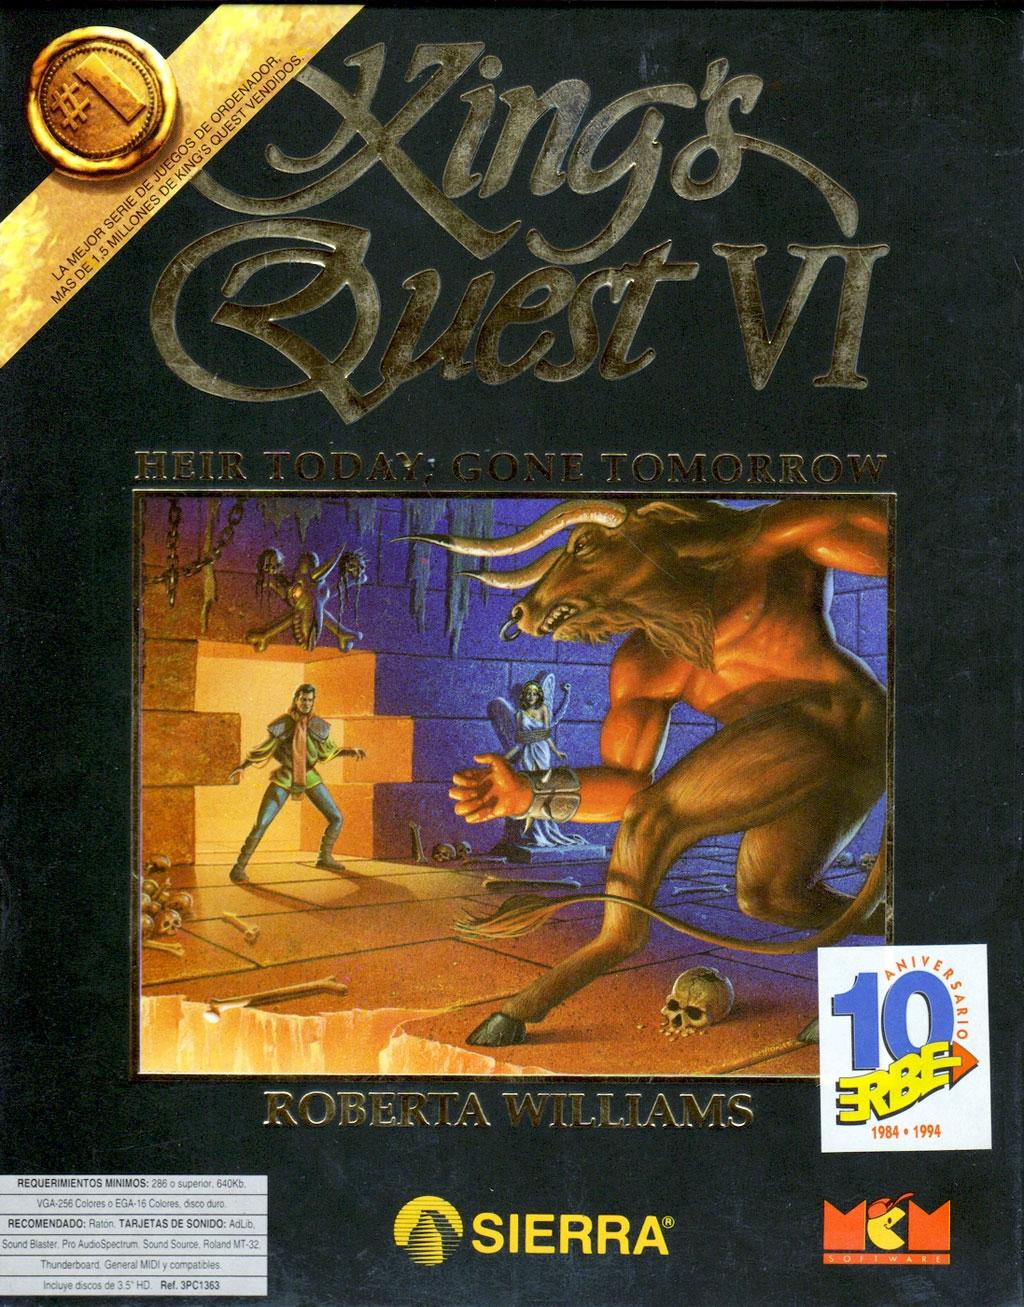 King's Quest VI - Heir Today, Gone Tomorrow - Portada.jpg